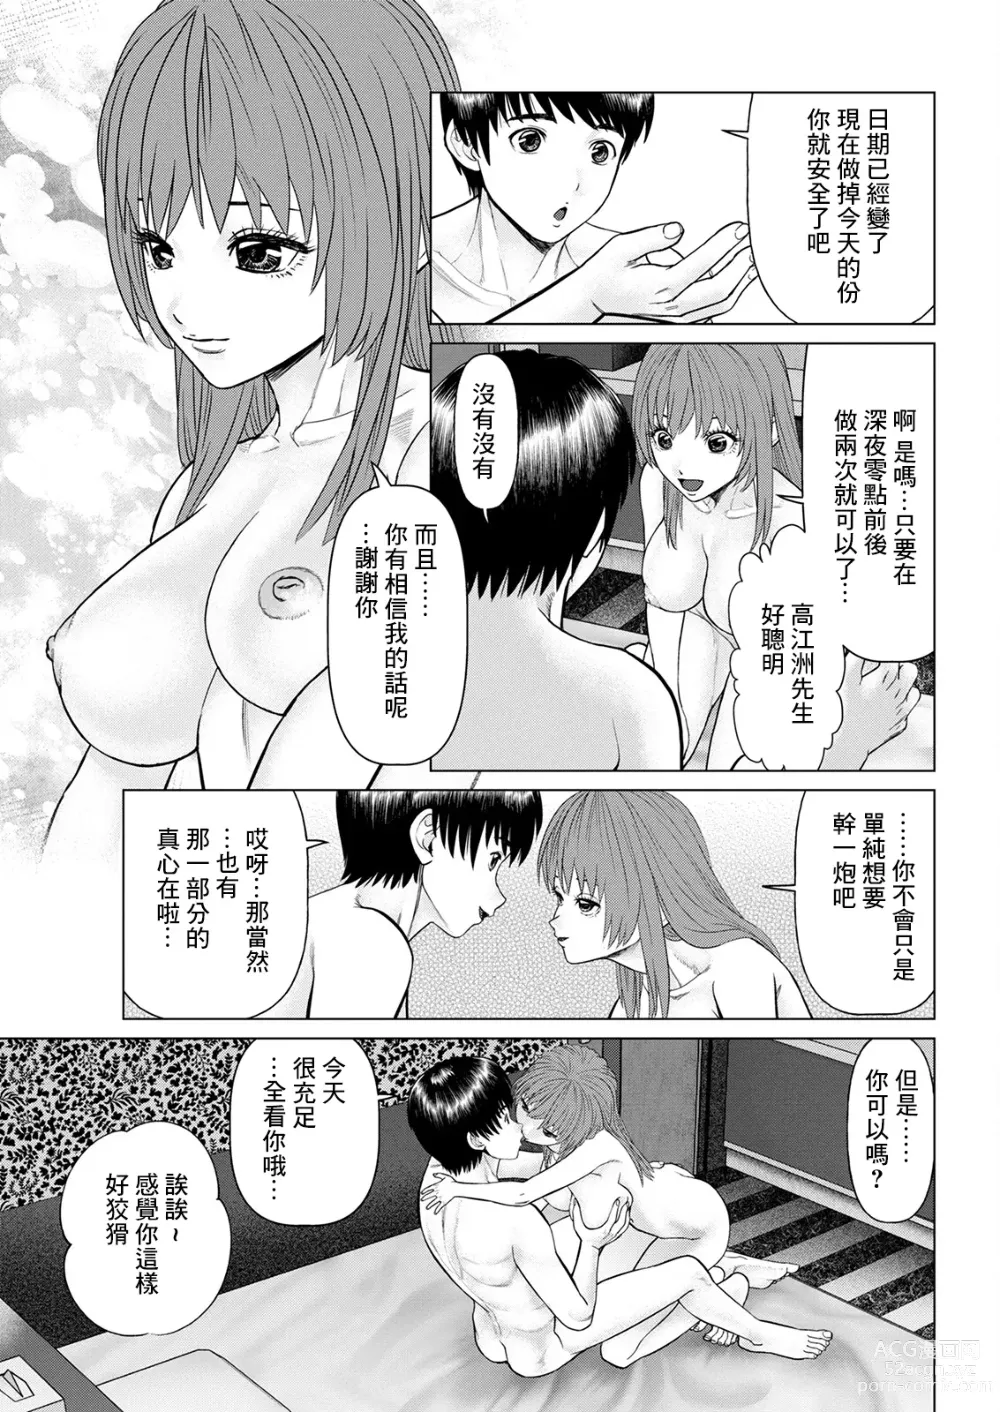 Page 7 of manga Gozen Reiji ni Dakishimete